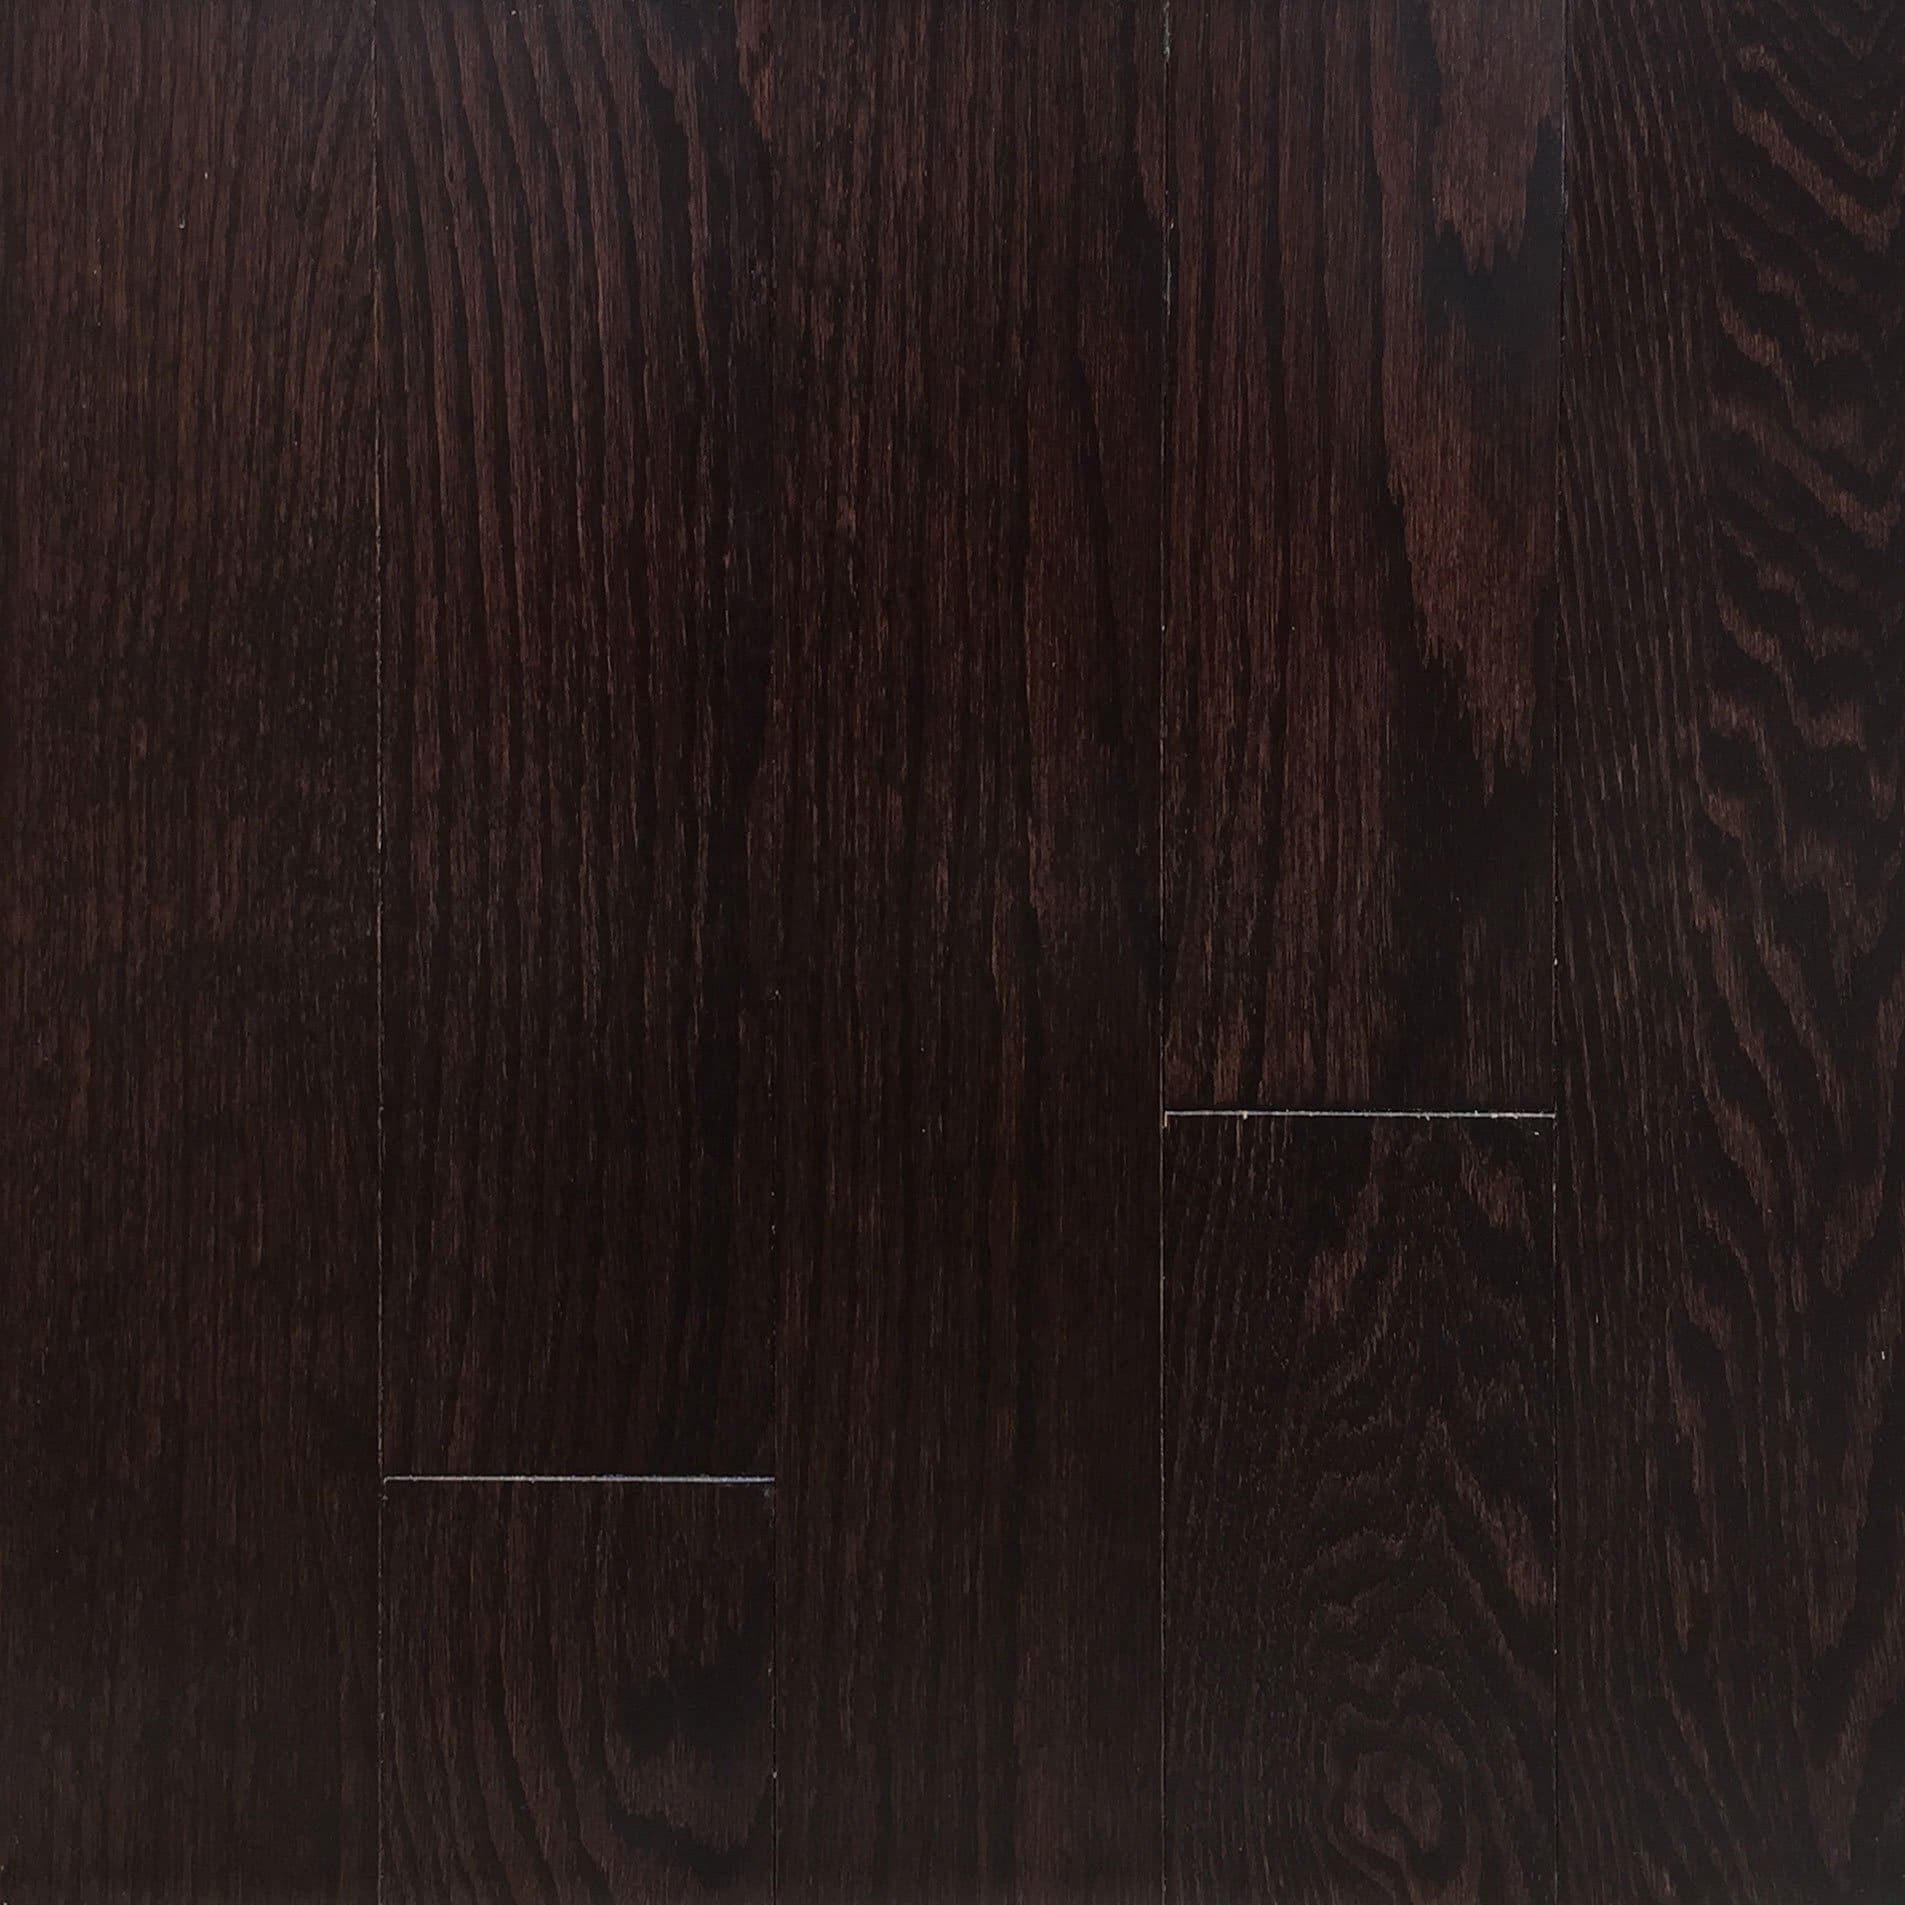 Red Oak Hardwood Flooring Across, Red Oak Select Hardwood Flooring